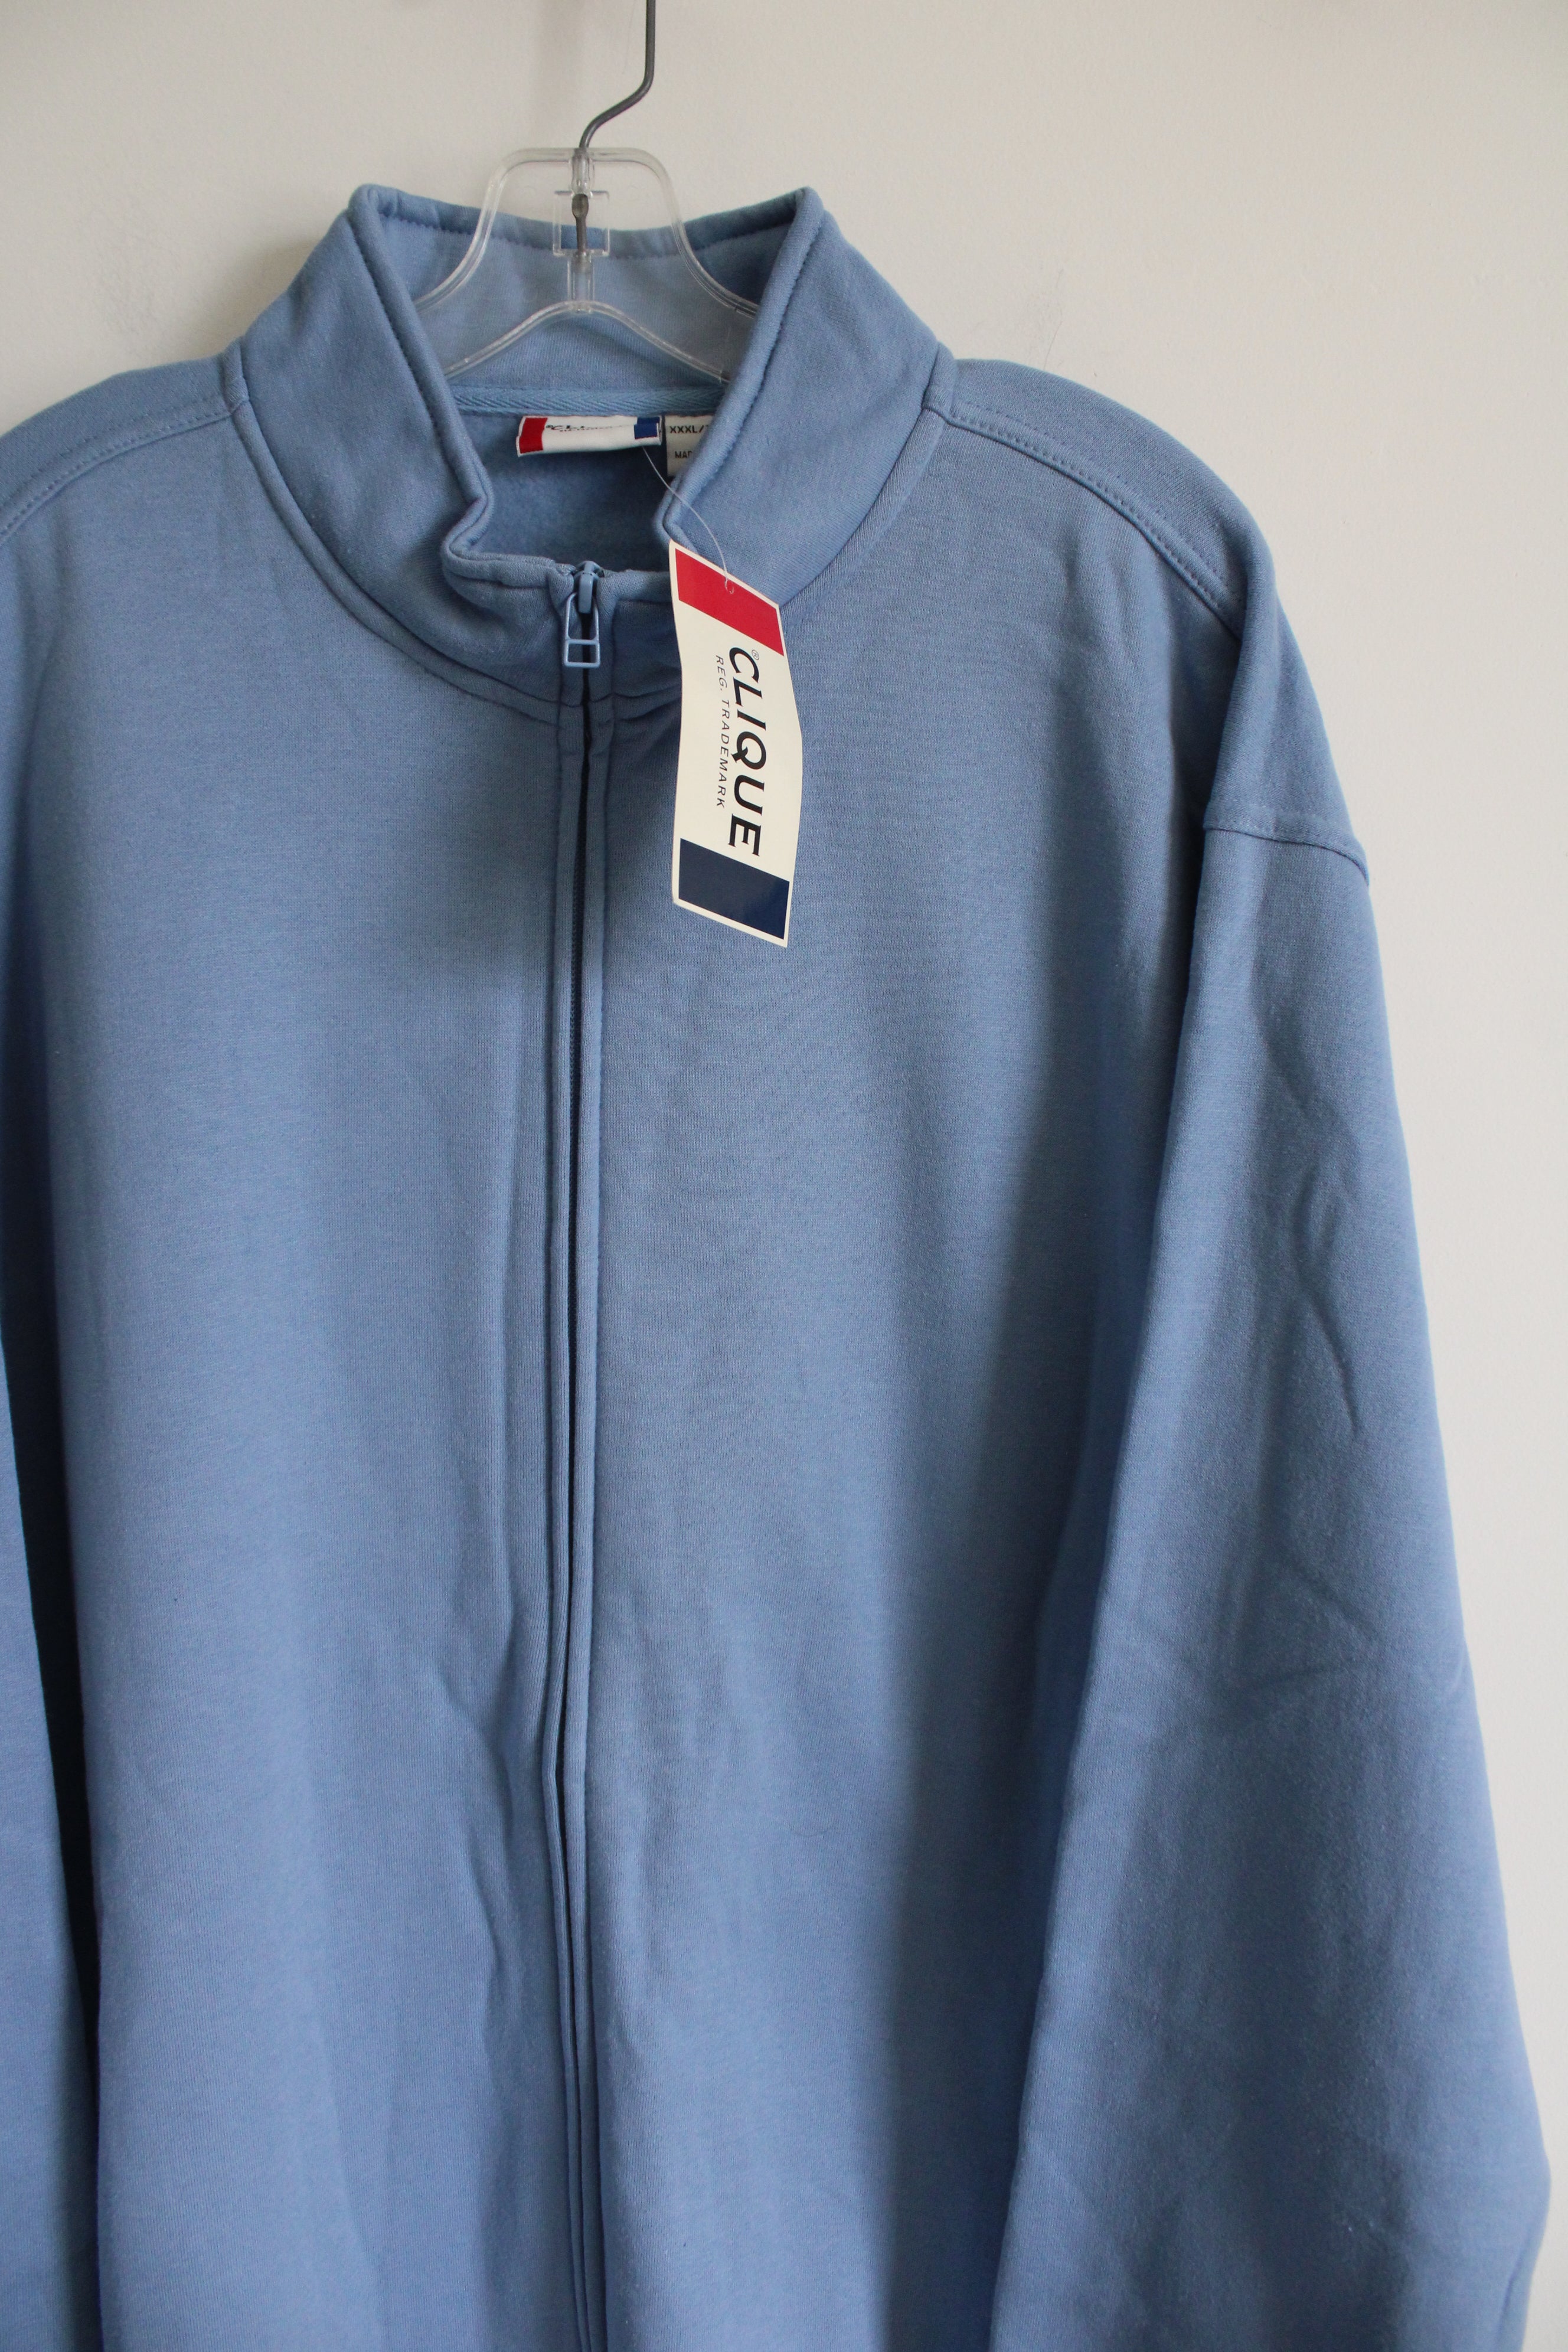 NEW Clique Blue Zip Up Sweatshirt Jacket | XXXL